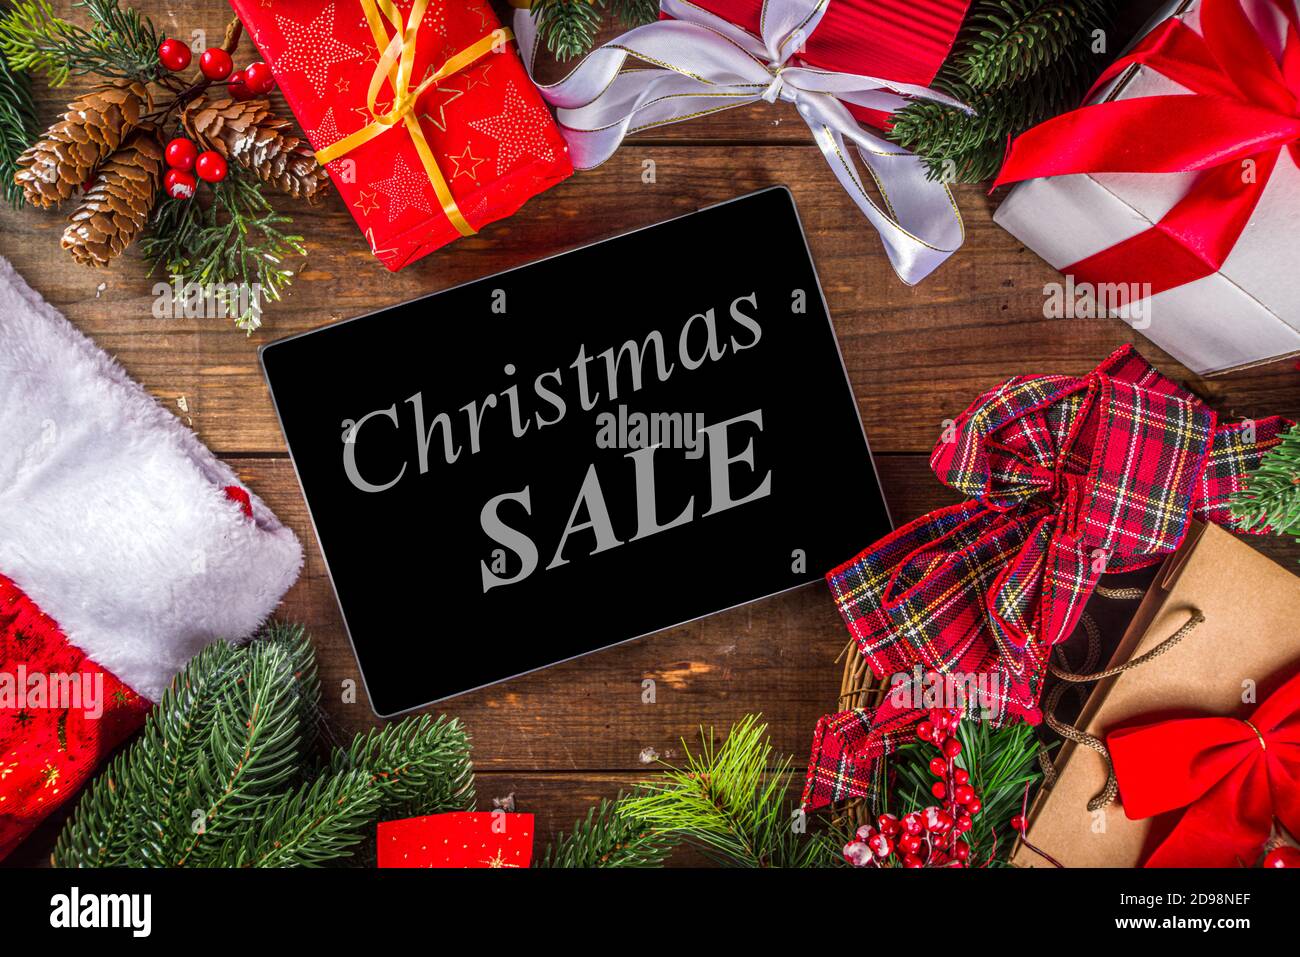 Cyber Monday Deals, Christmas Sales